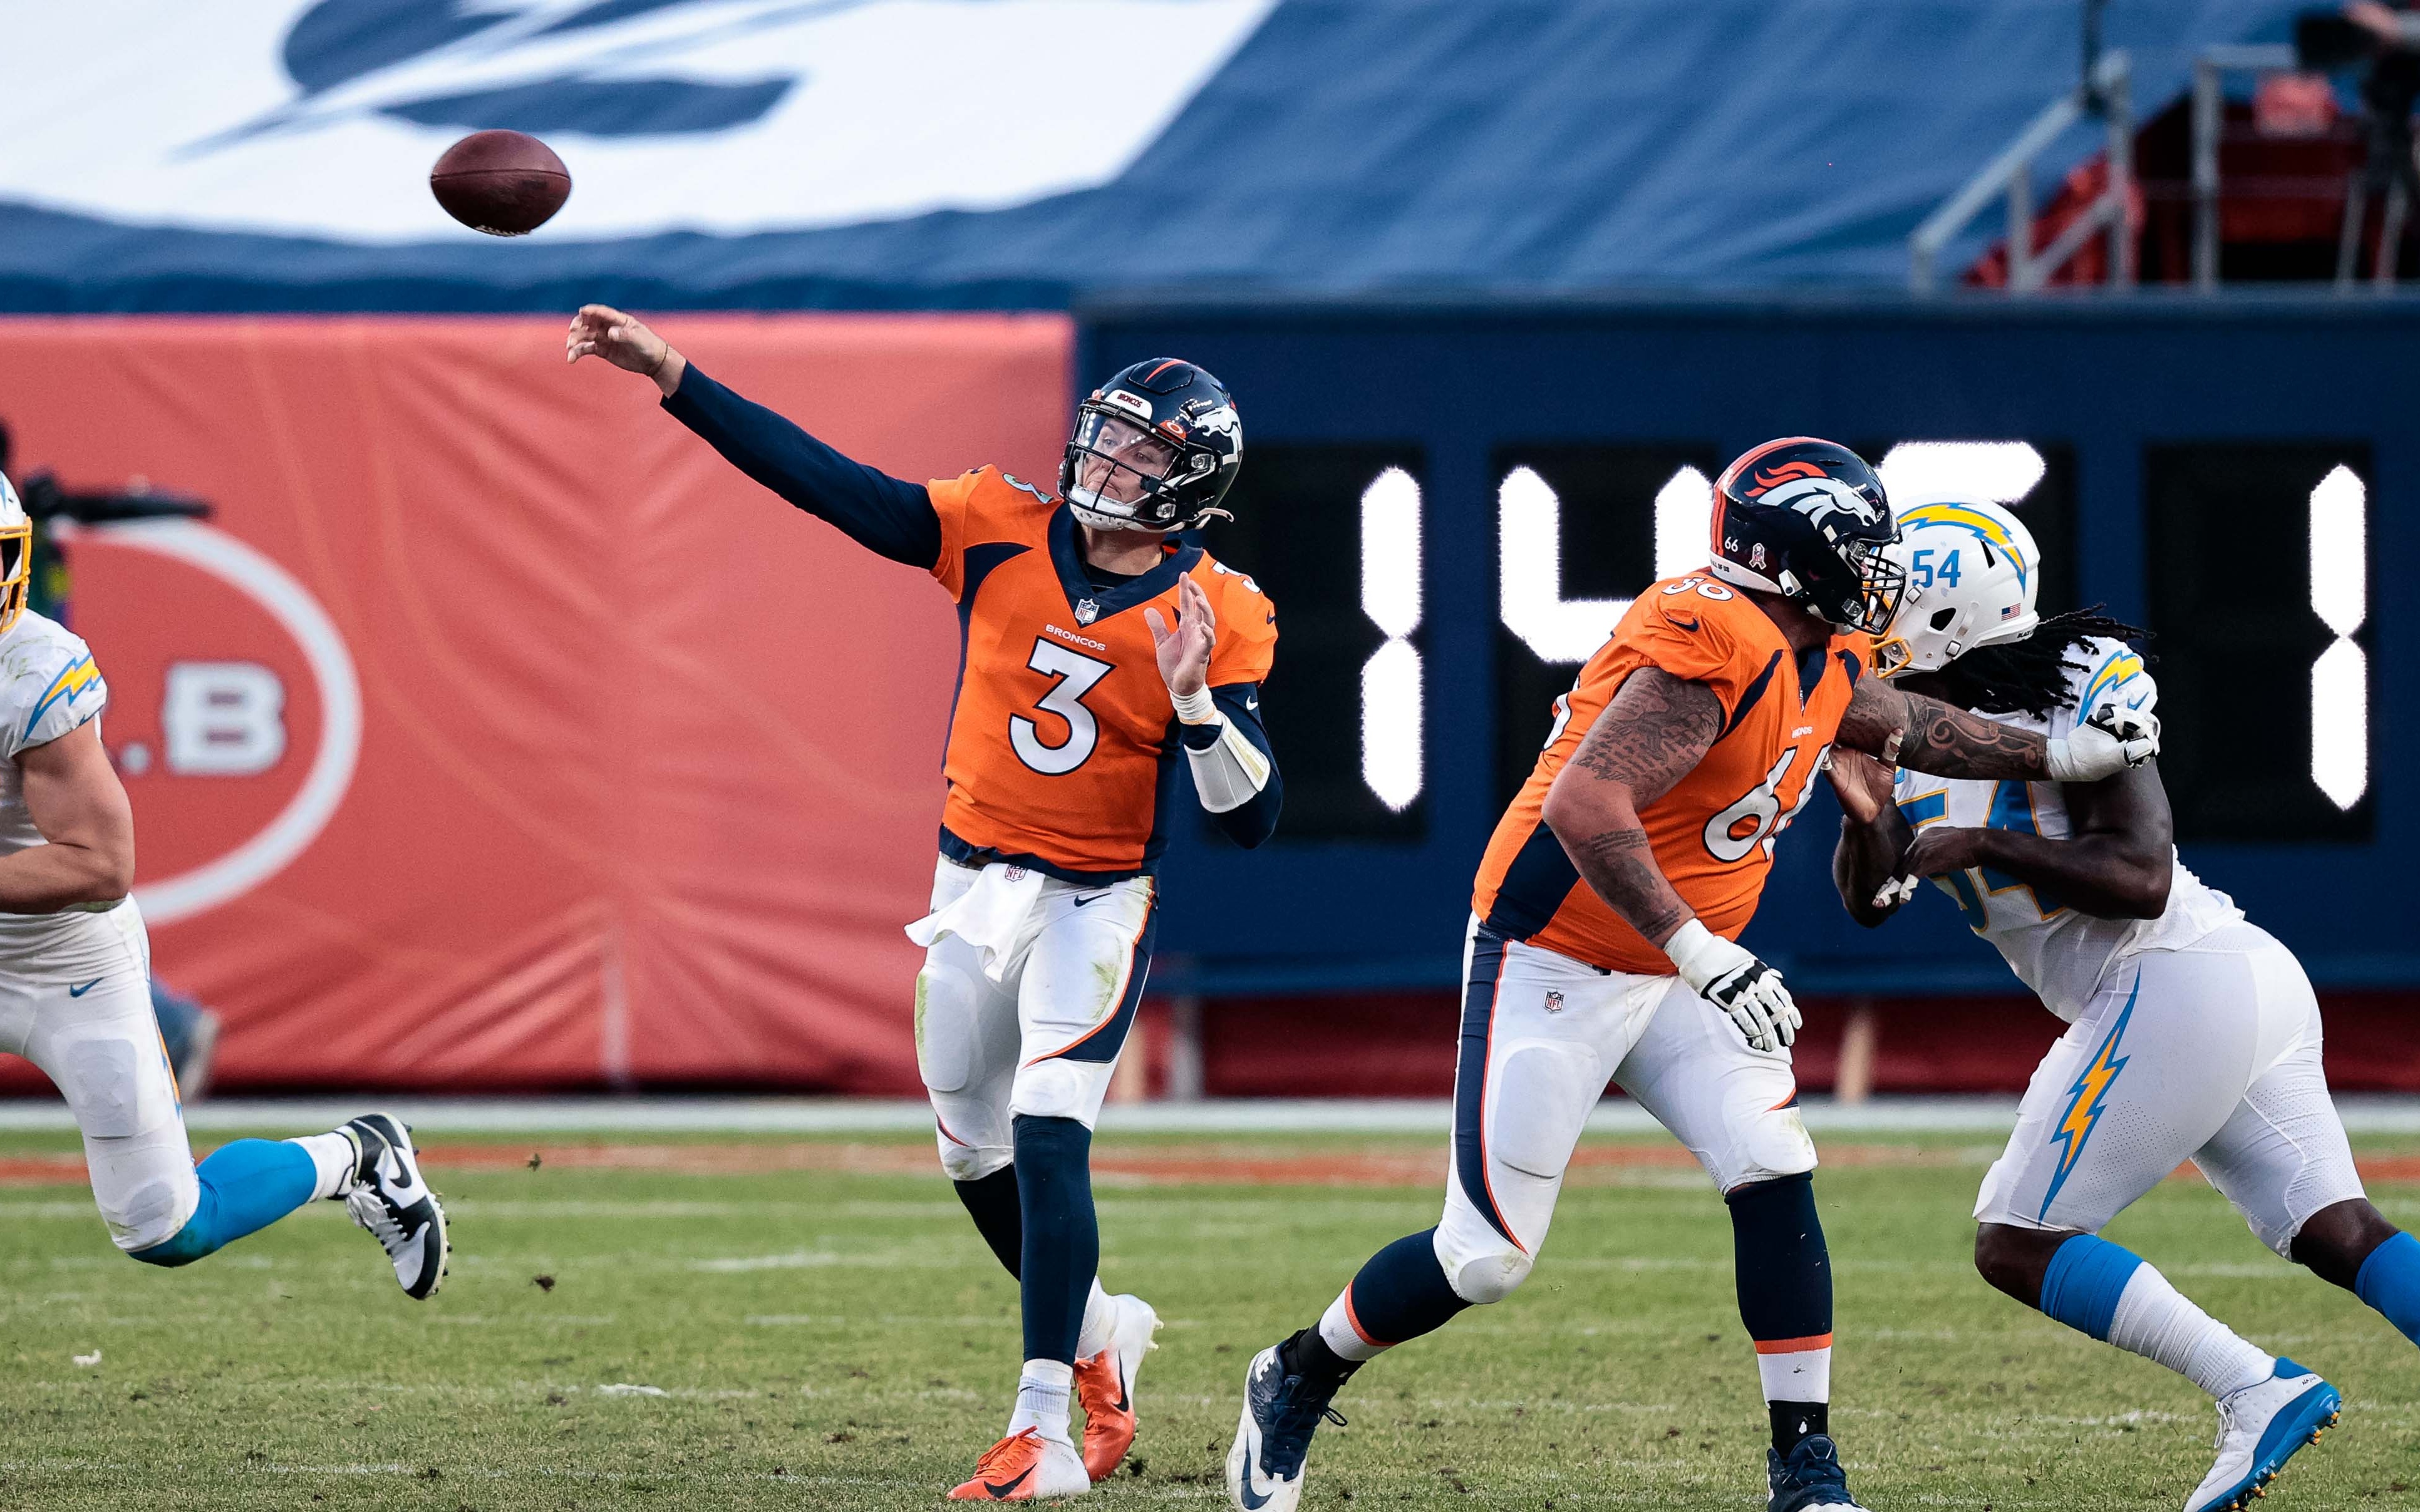 Broncos' Drew Lock throws. Credit: Isaiah J. Downing, USA TODAY Sports.